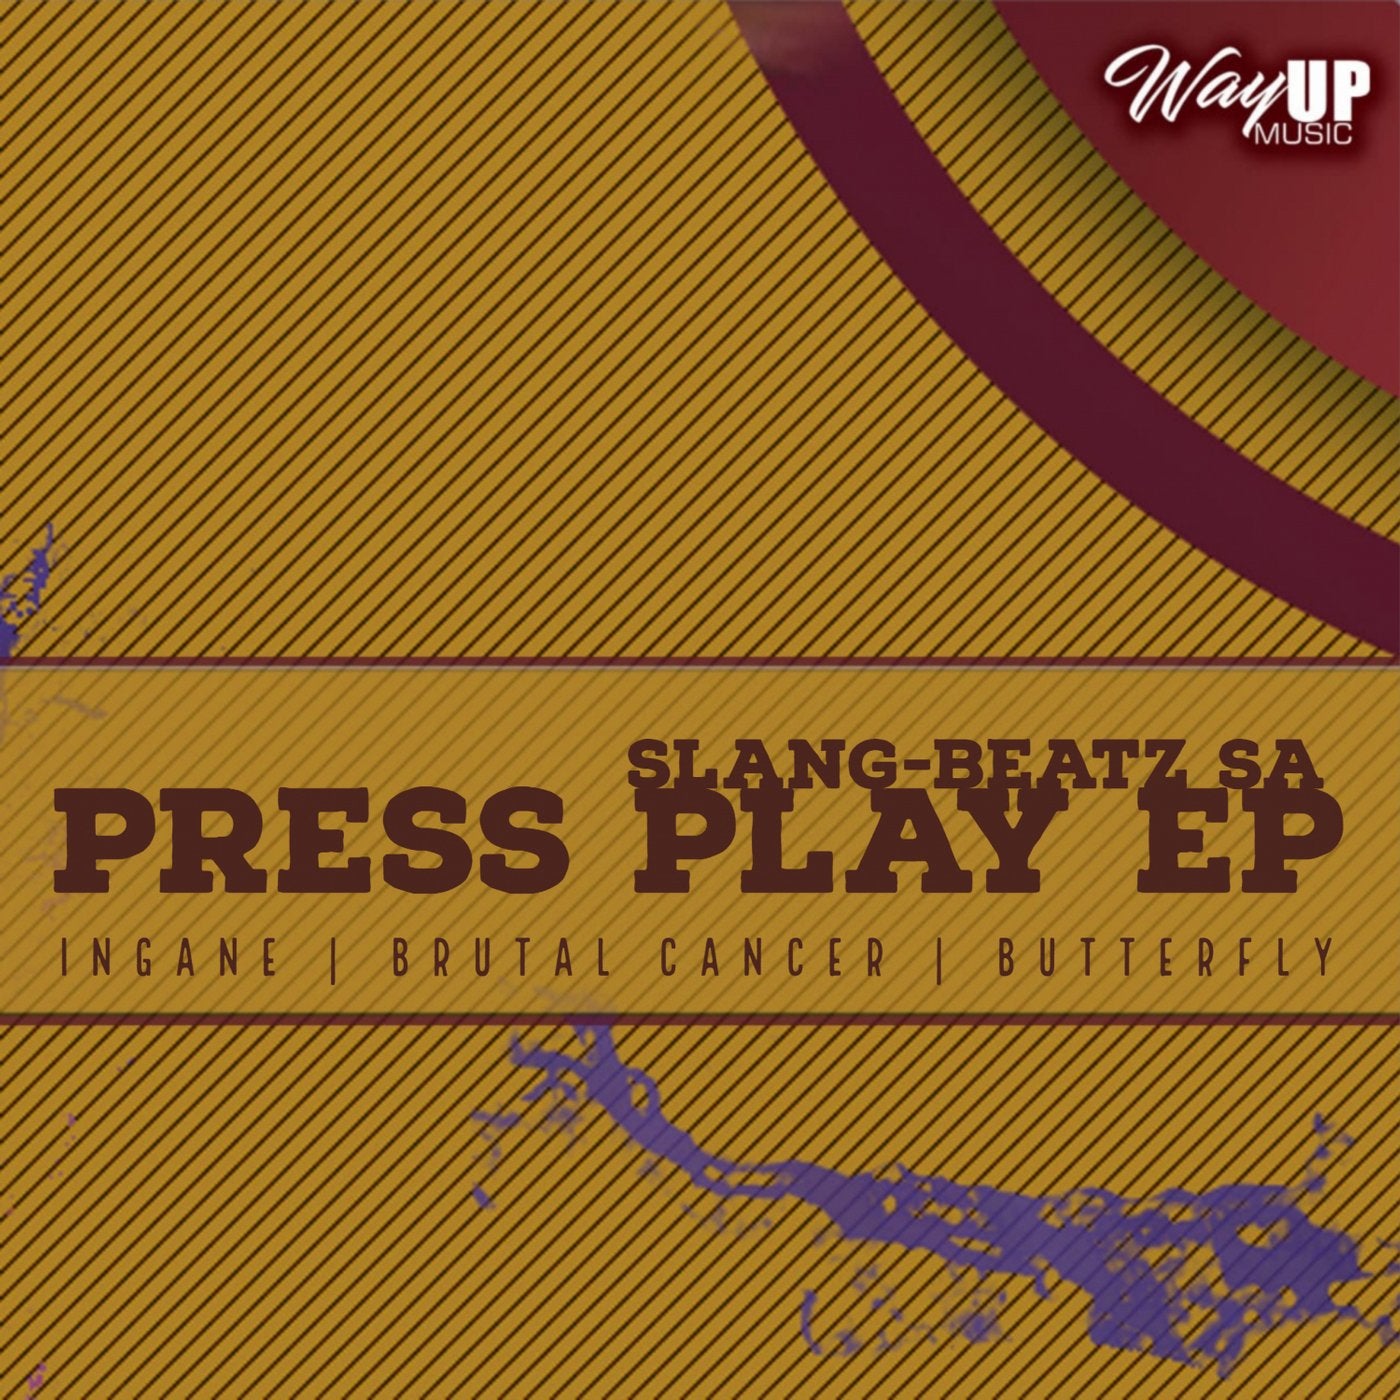 Press Play EP